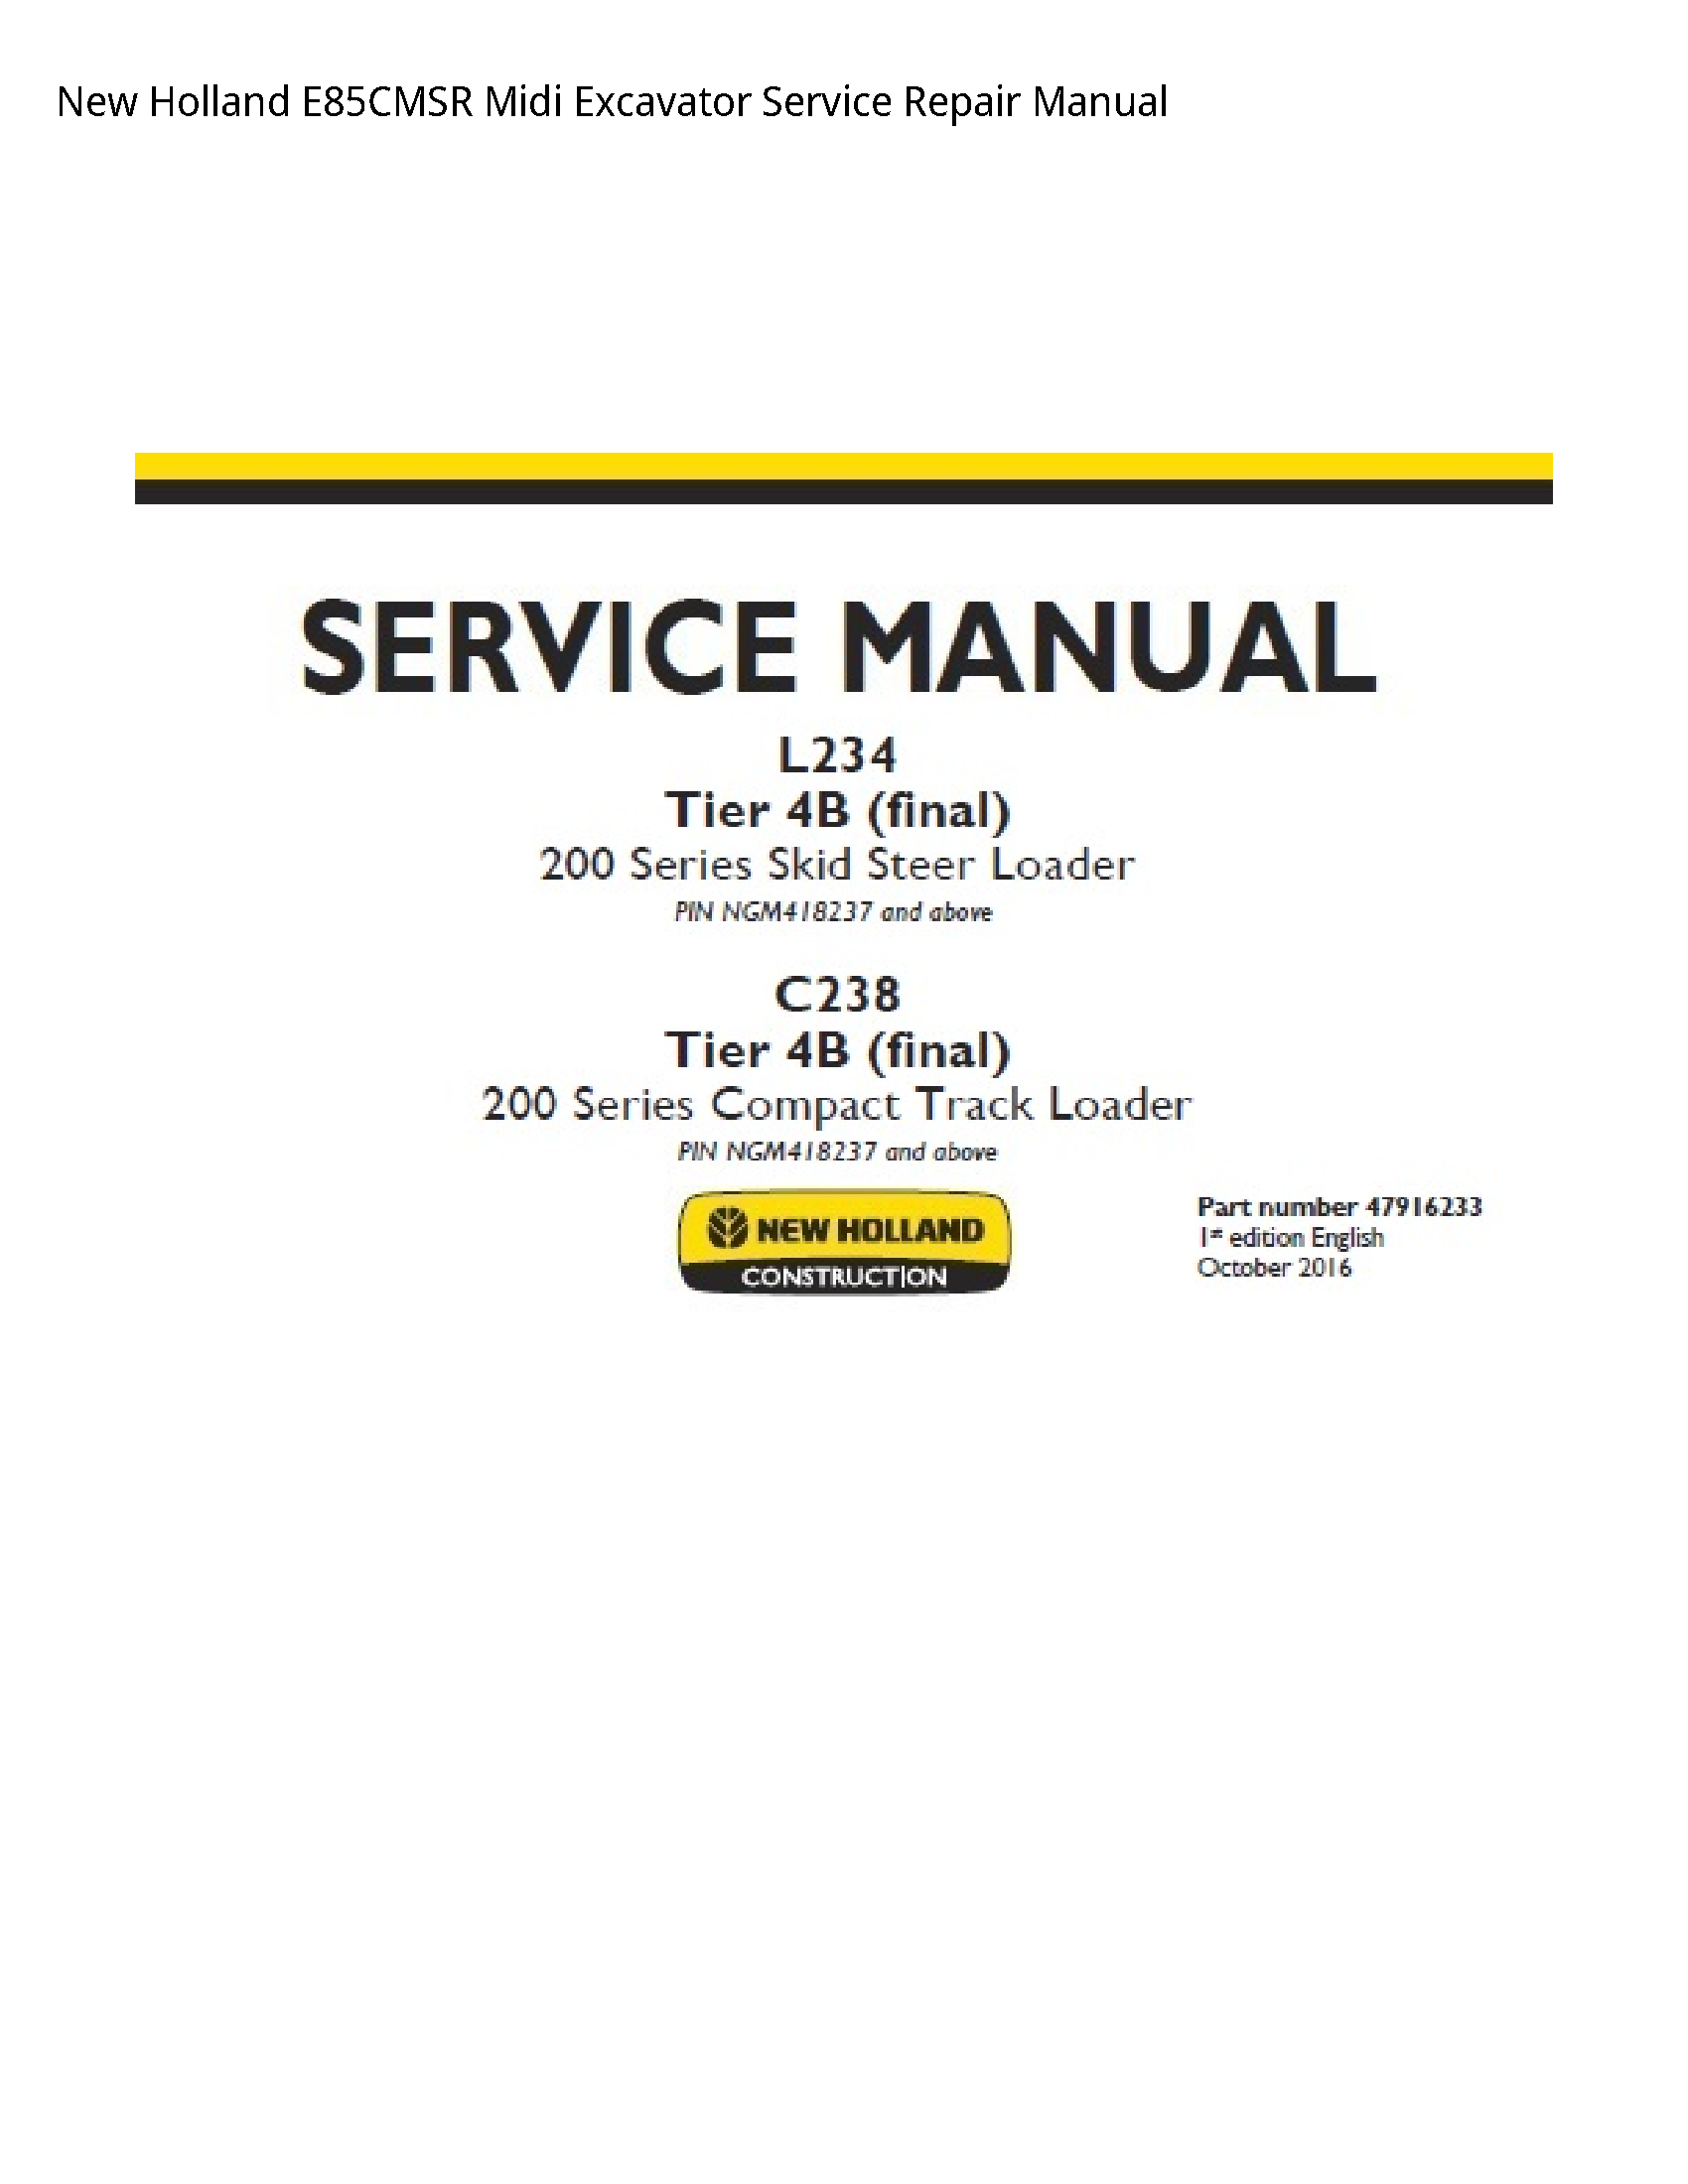 New Holland E85CMSR Midi Excavator manual